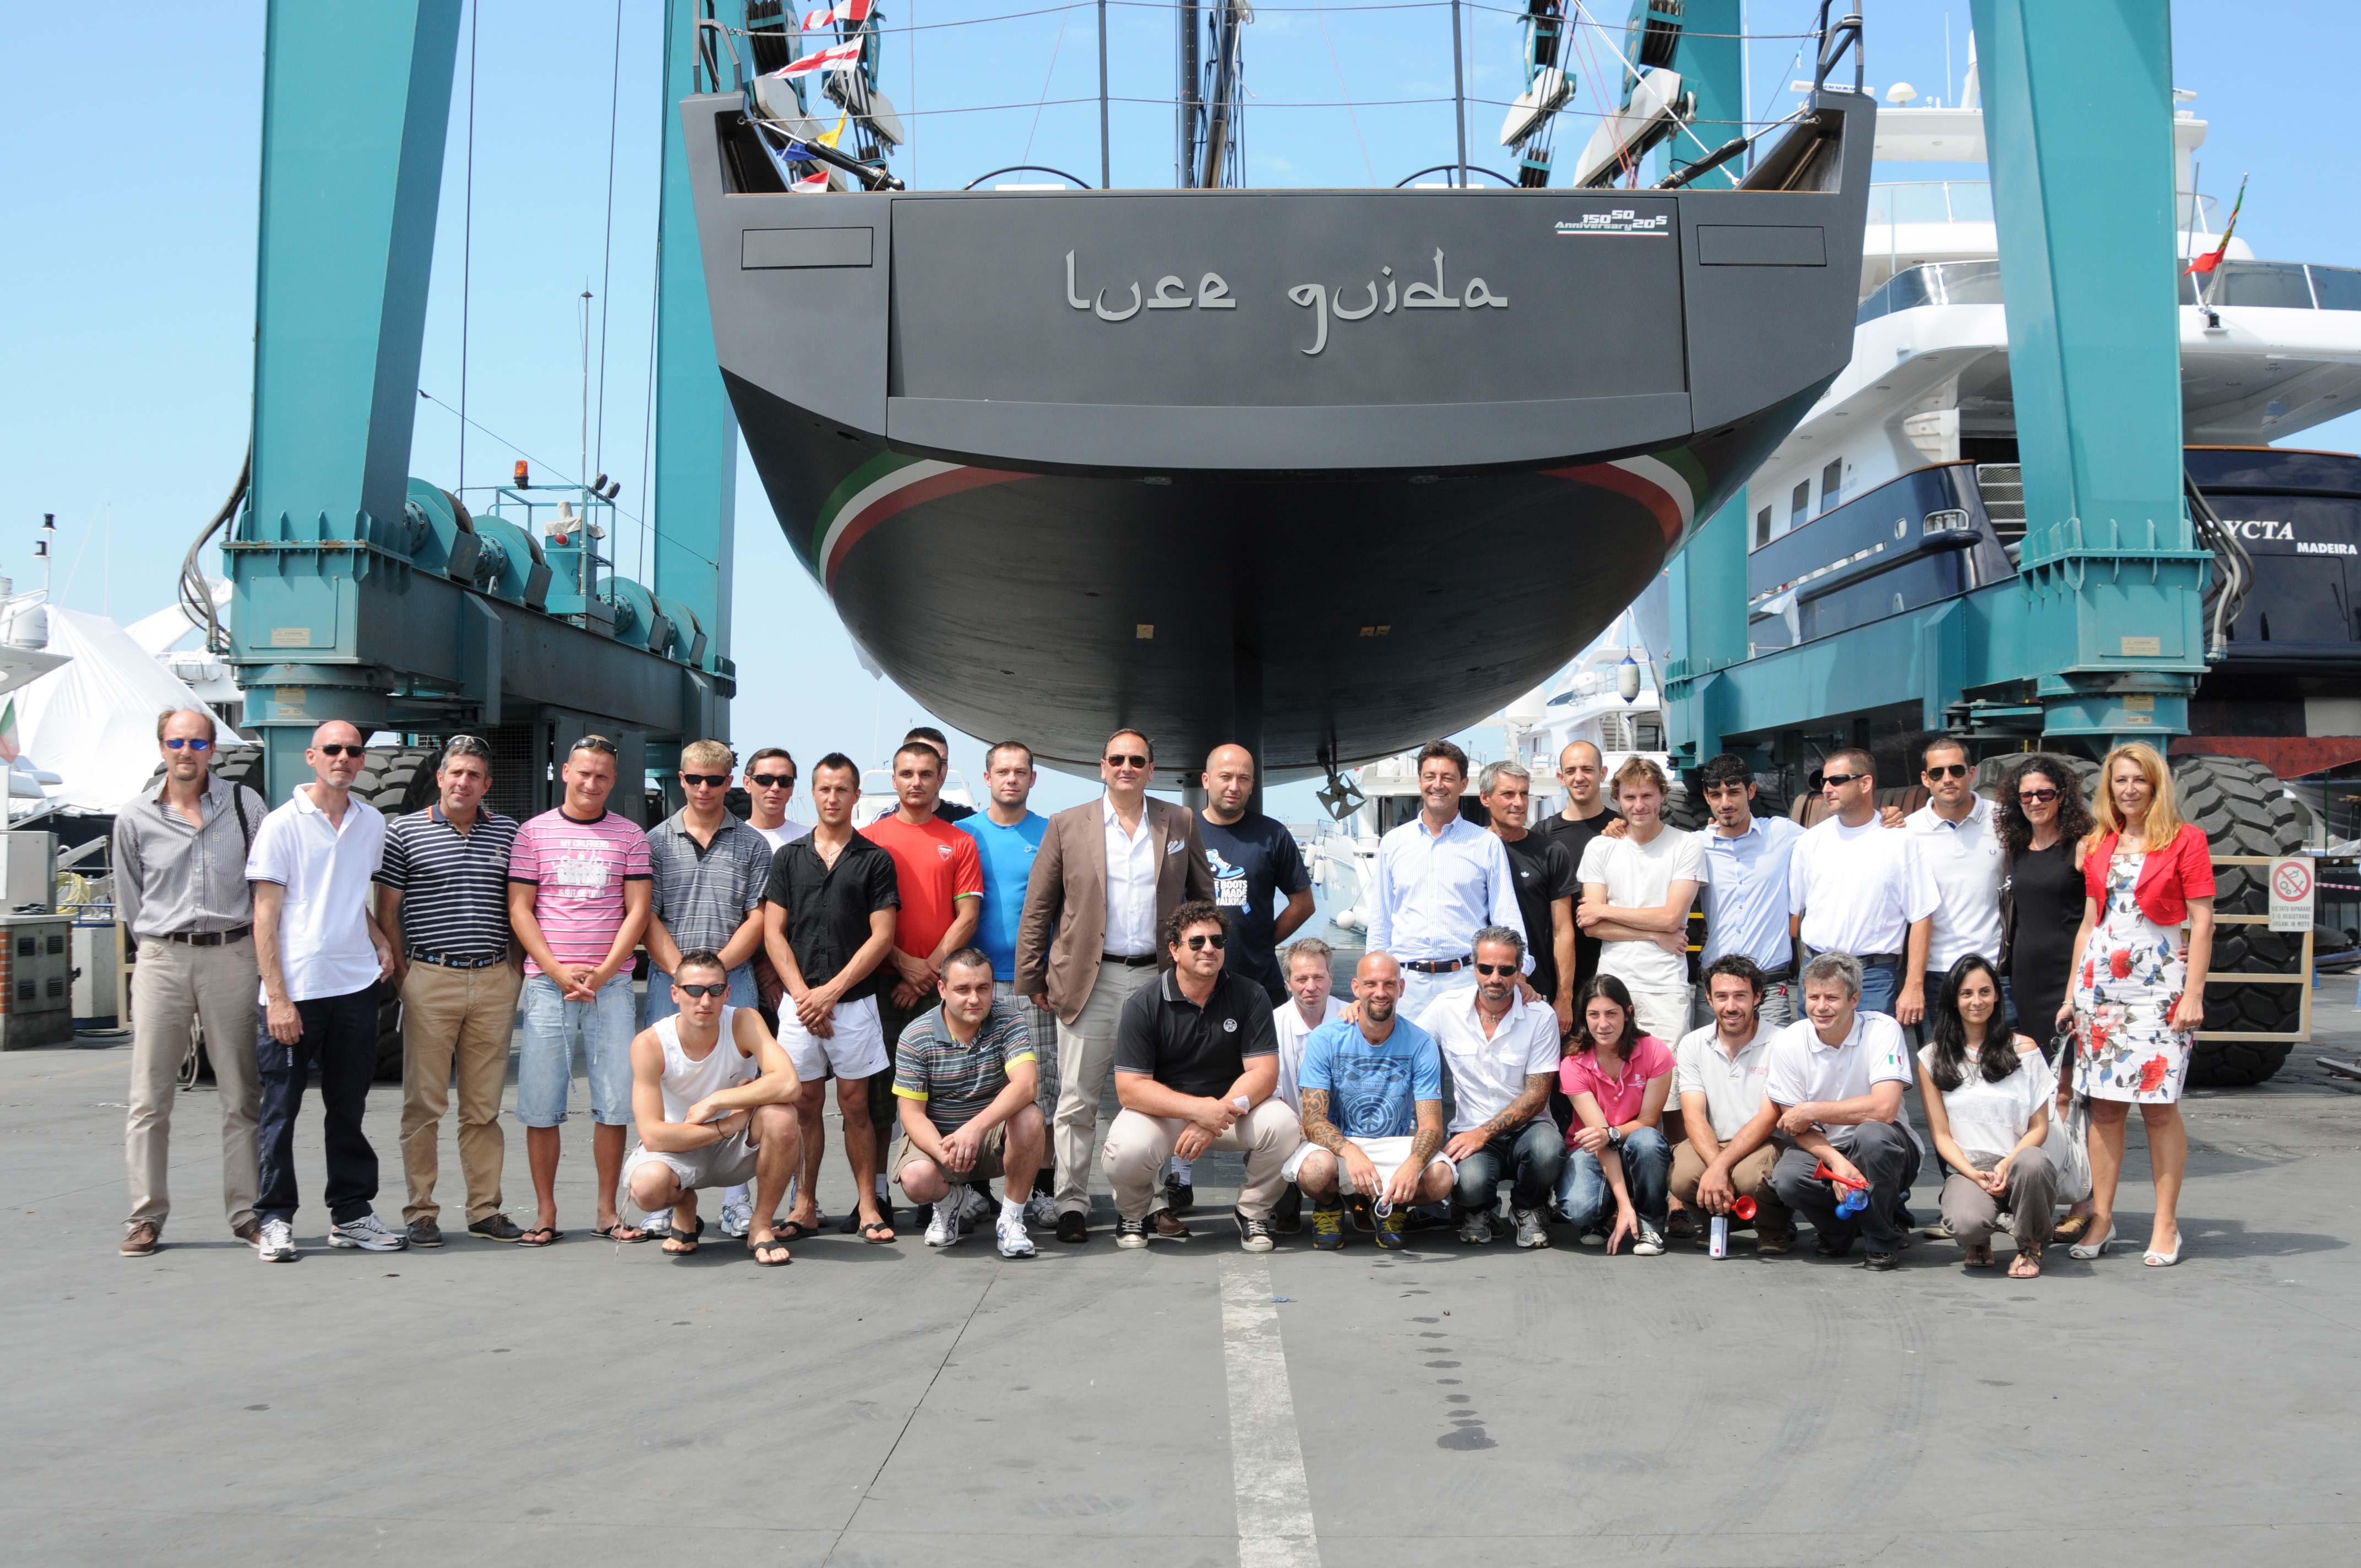 Launch of the Vismara V80 Maxi Sailing Yacht LUCE GUIDA